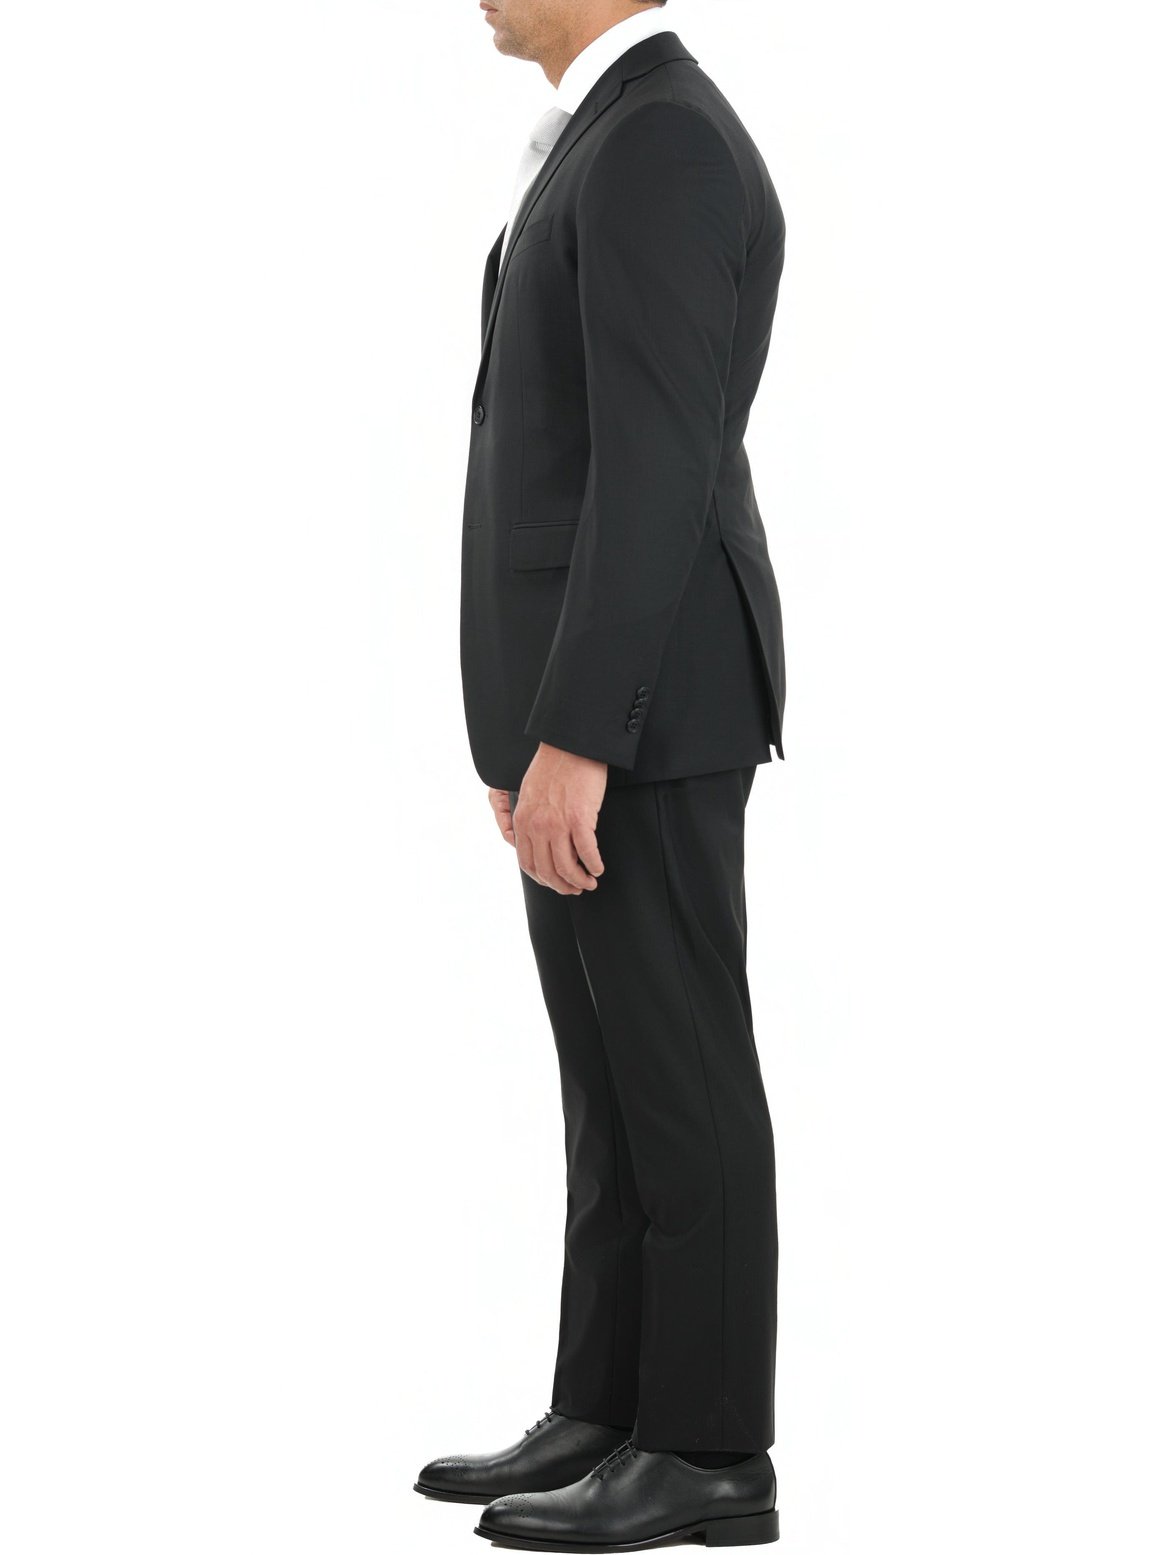 John Varvatos SUITS John Varvatos Mens Slim Fit Black Tonal Striped Two Button Wool Blend Suit